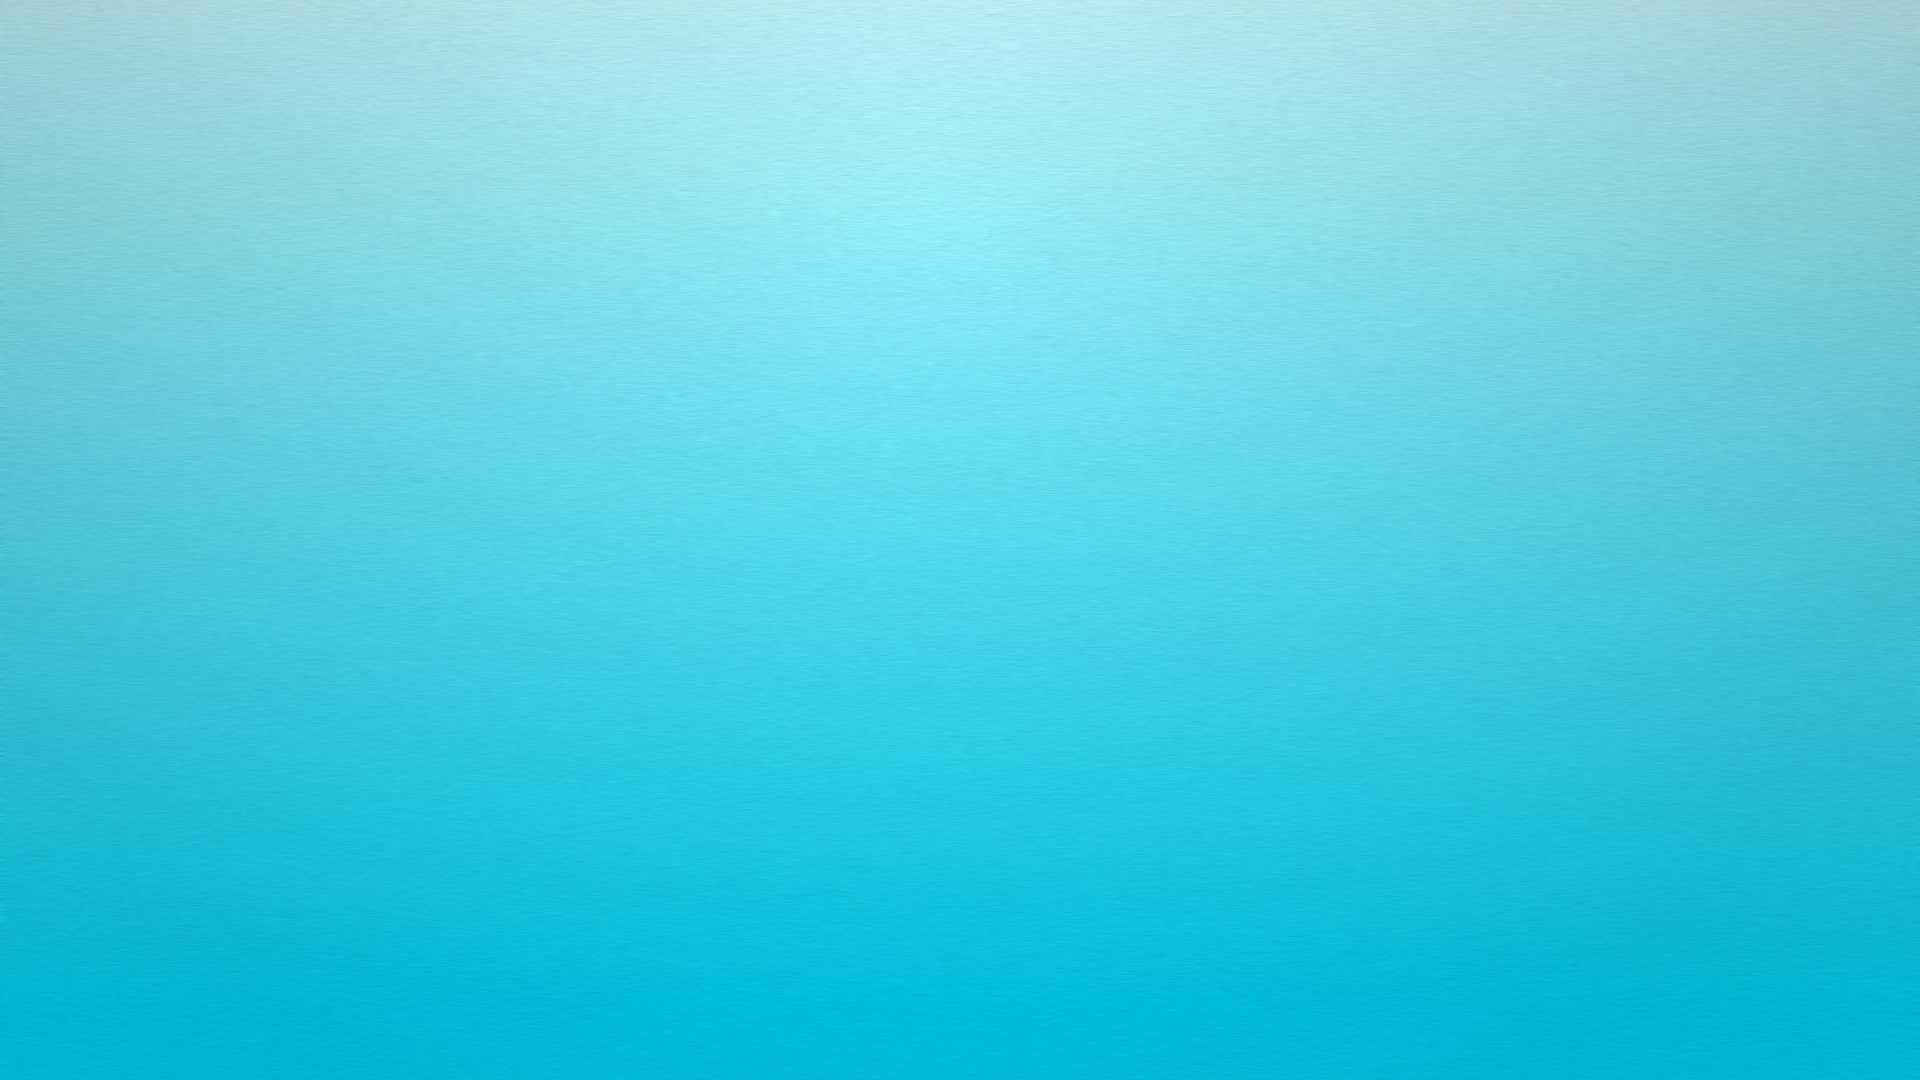 plain light blue background